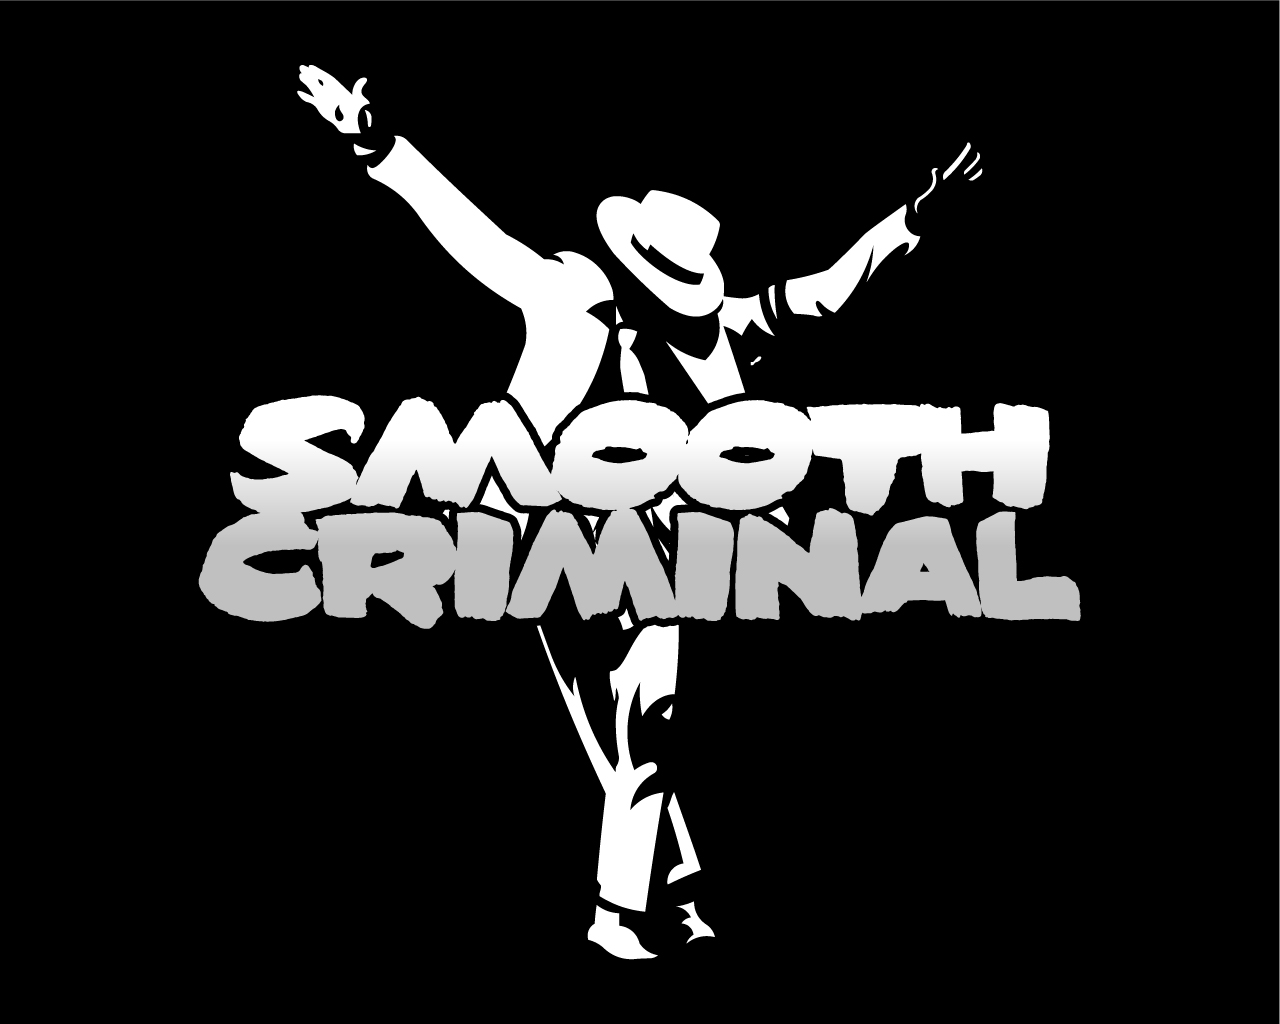 The_Smooth_Criminal_by_BiggStankDogg.jpg